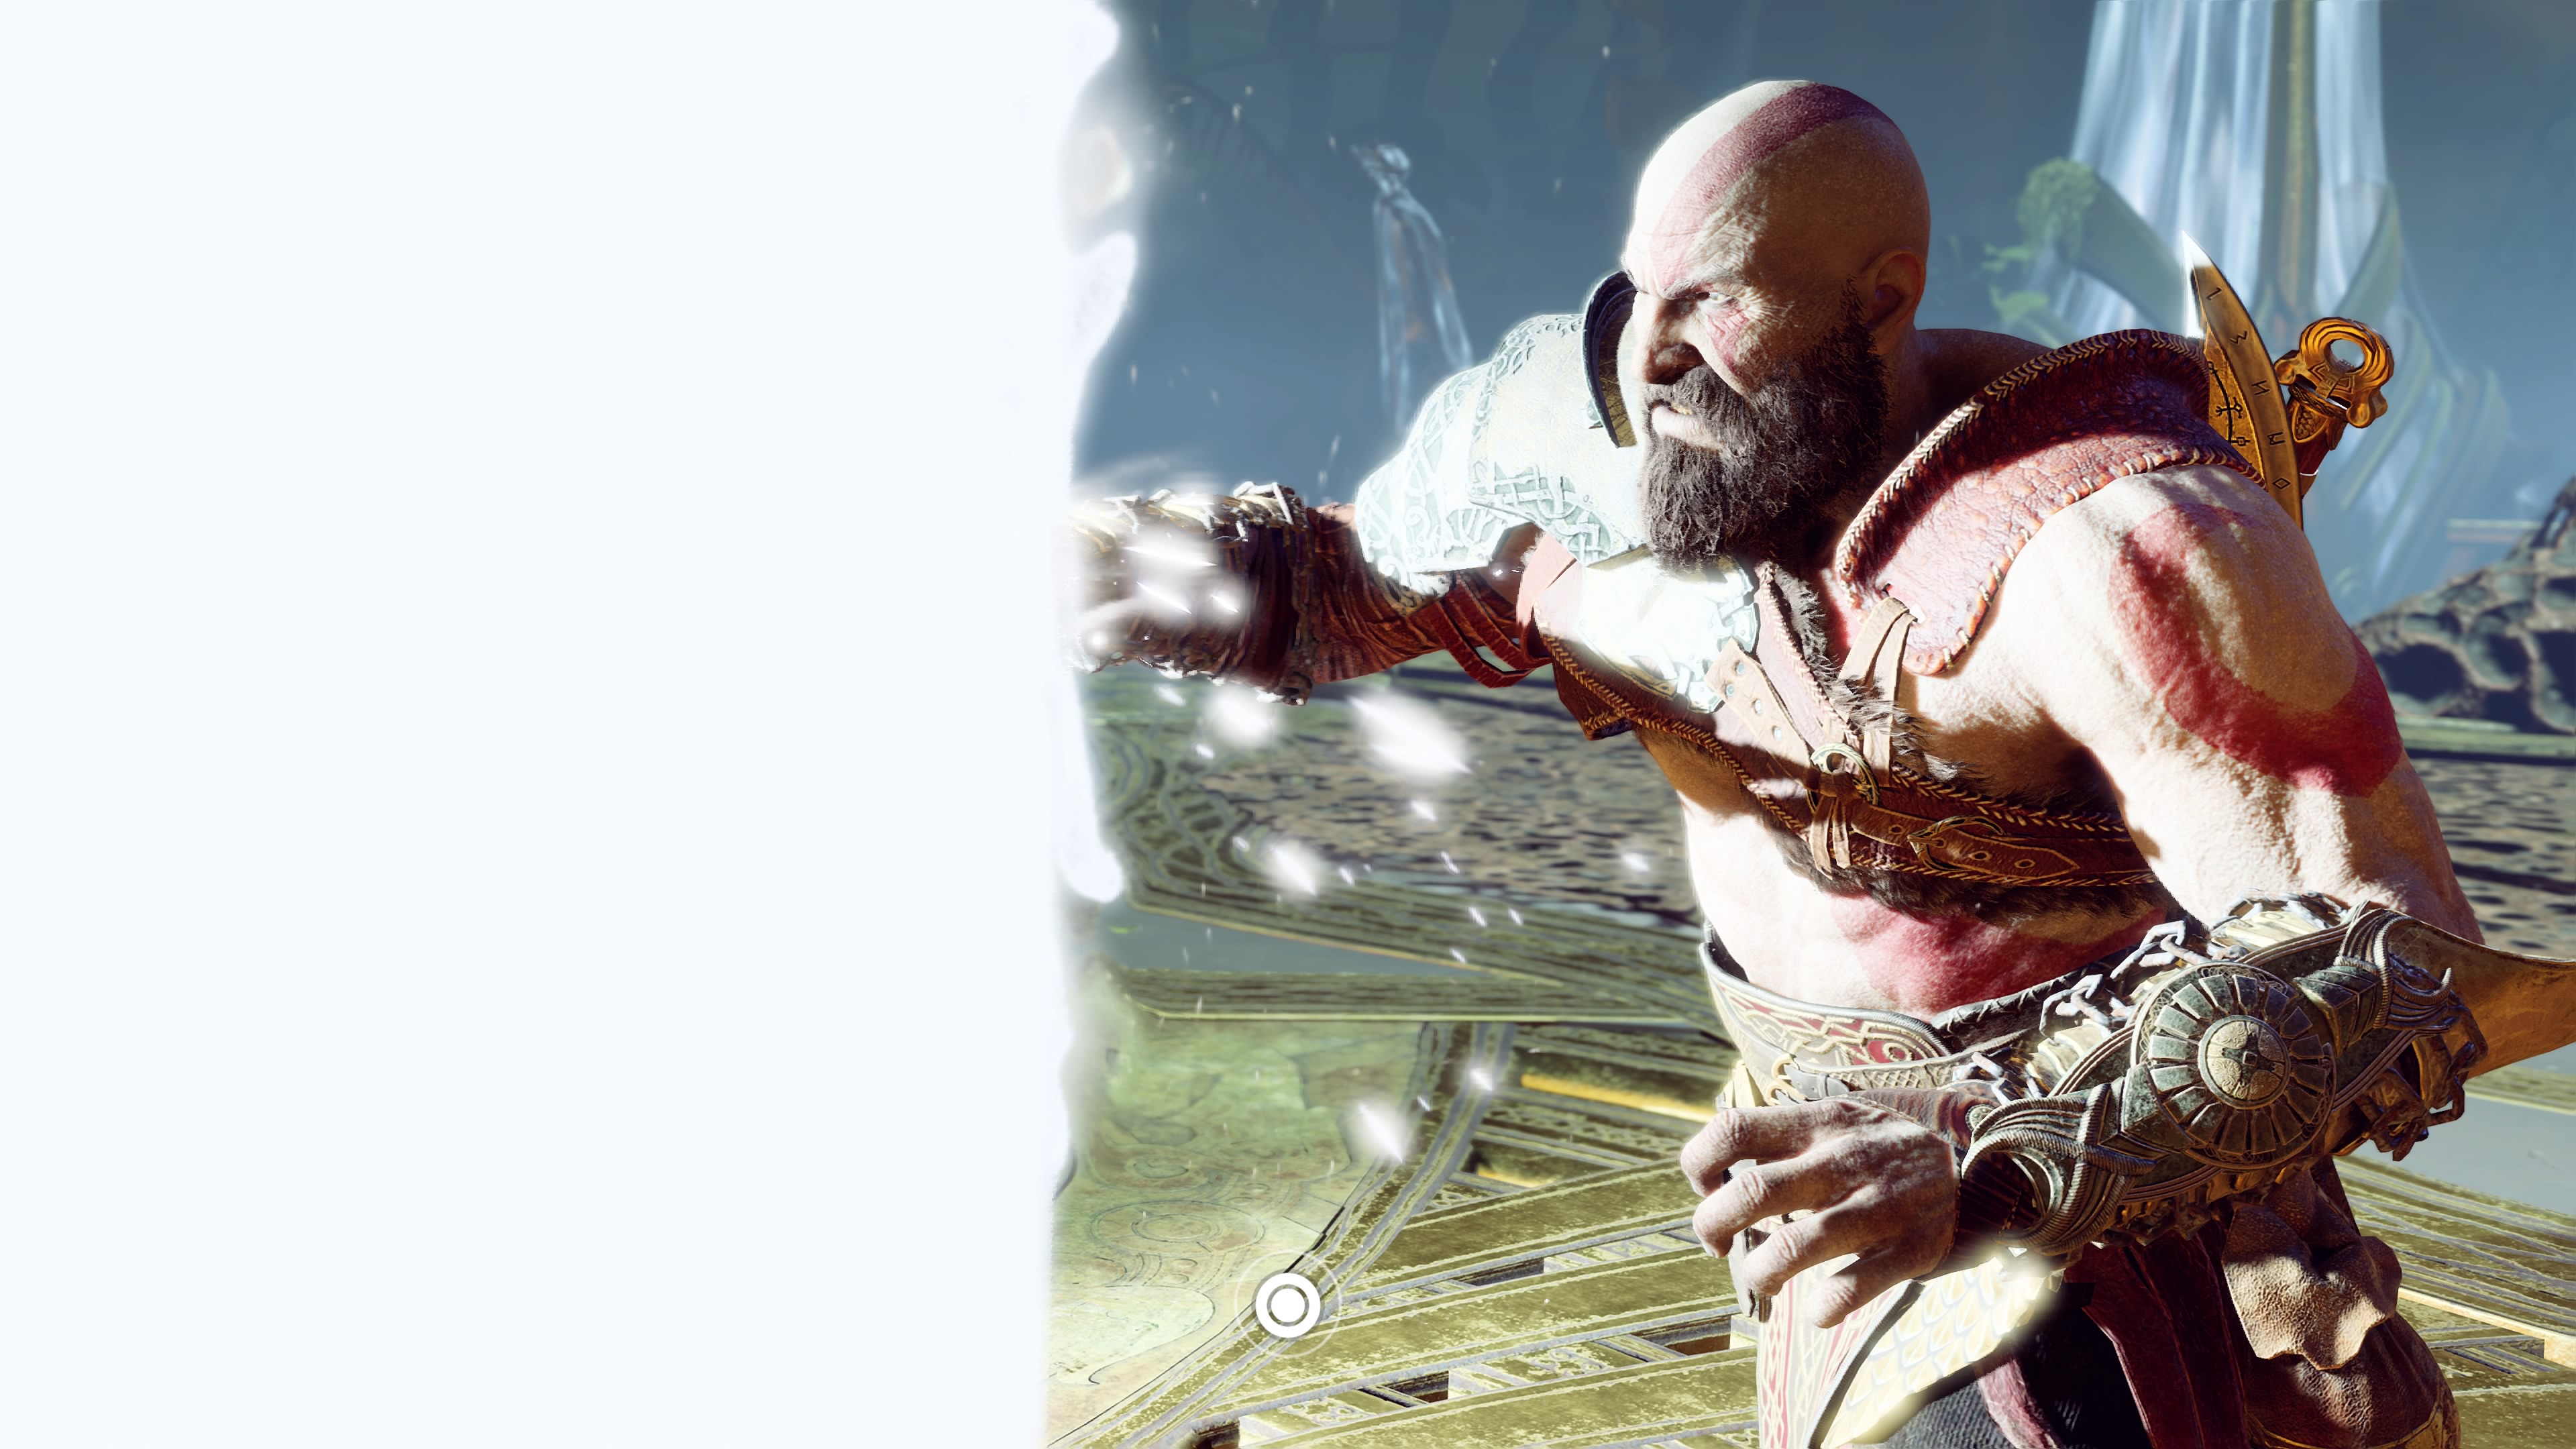 General 3840x2160 God of War Kratos video games video game art fantasy art Playstation 4 Pro PlayStation PlayStation 4